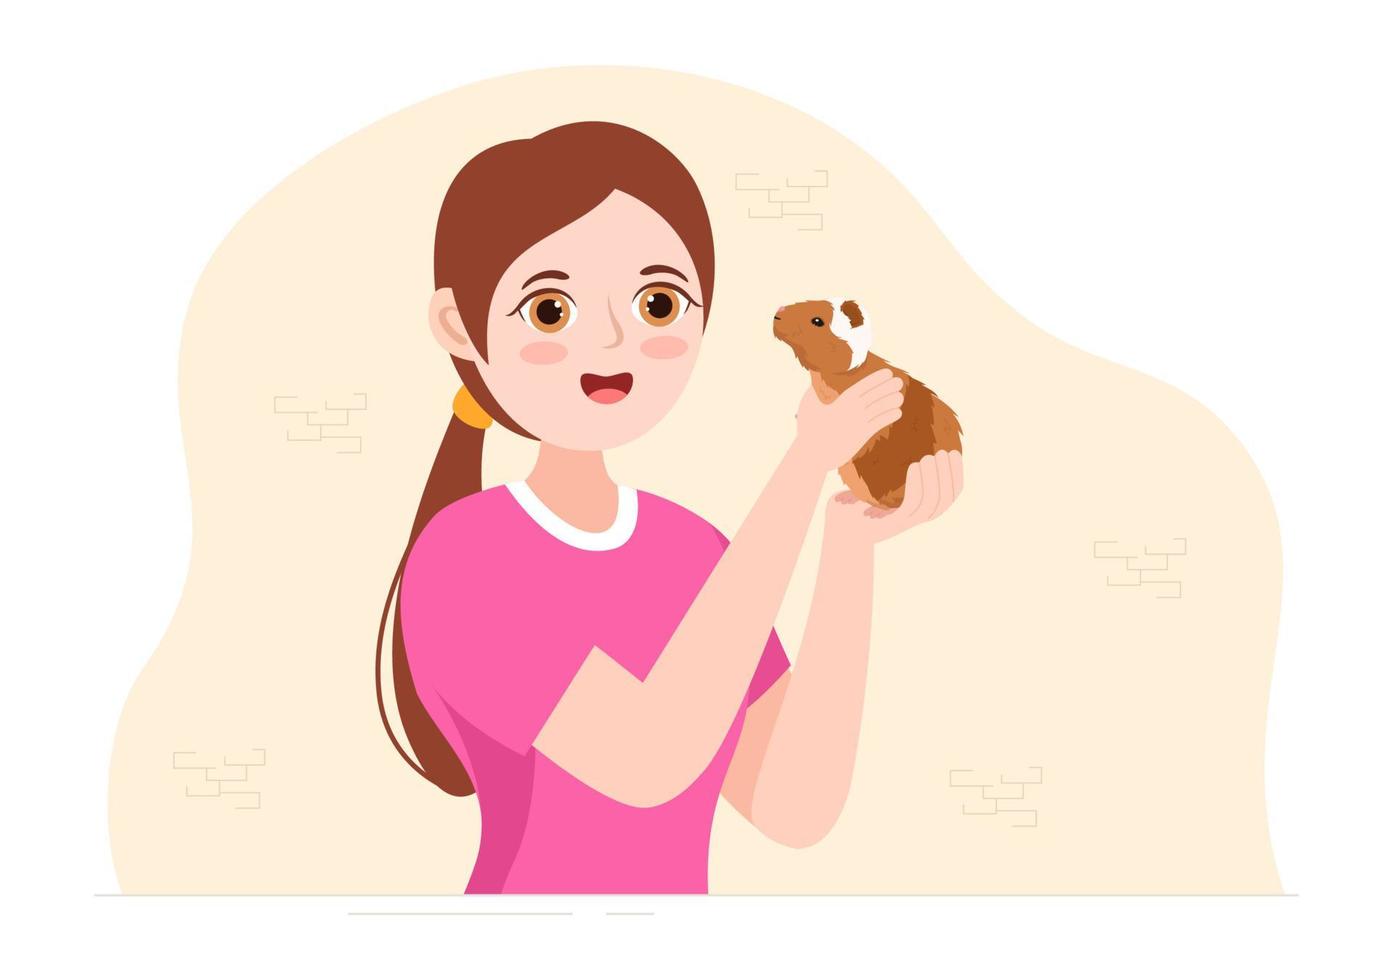 conejillo de indias mascotas hámsters animales razas adecuadas para póster o tarjeta de felicitación en dibujos animados lindos planos dibujados a mano plantillas ilustración vector